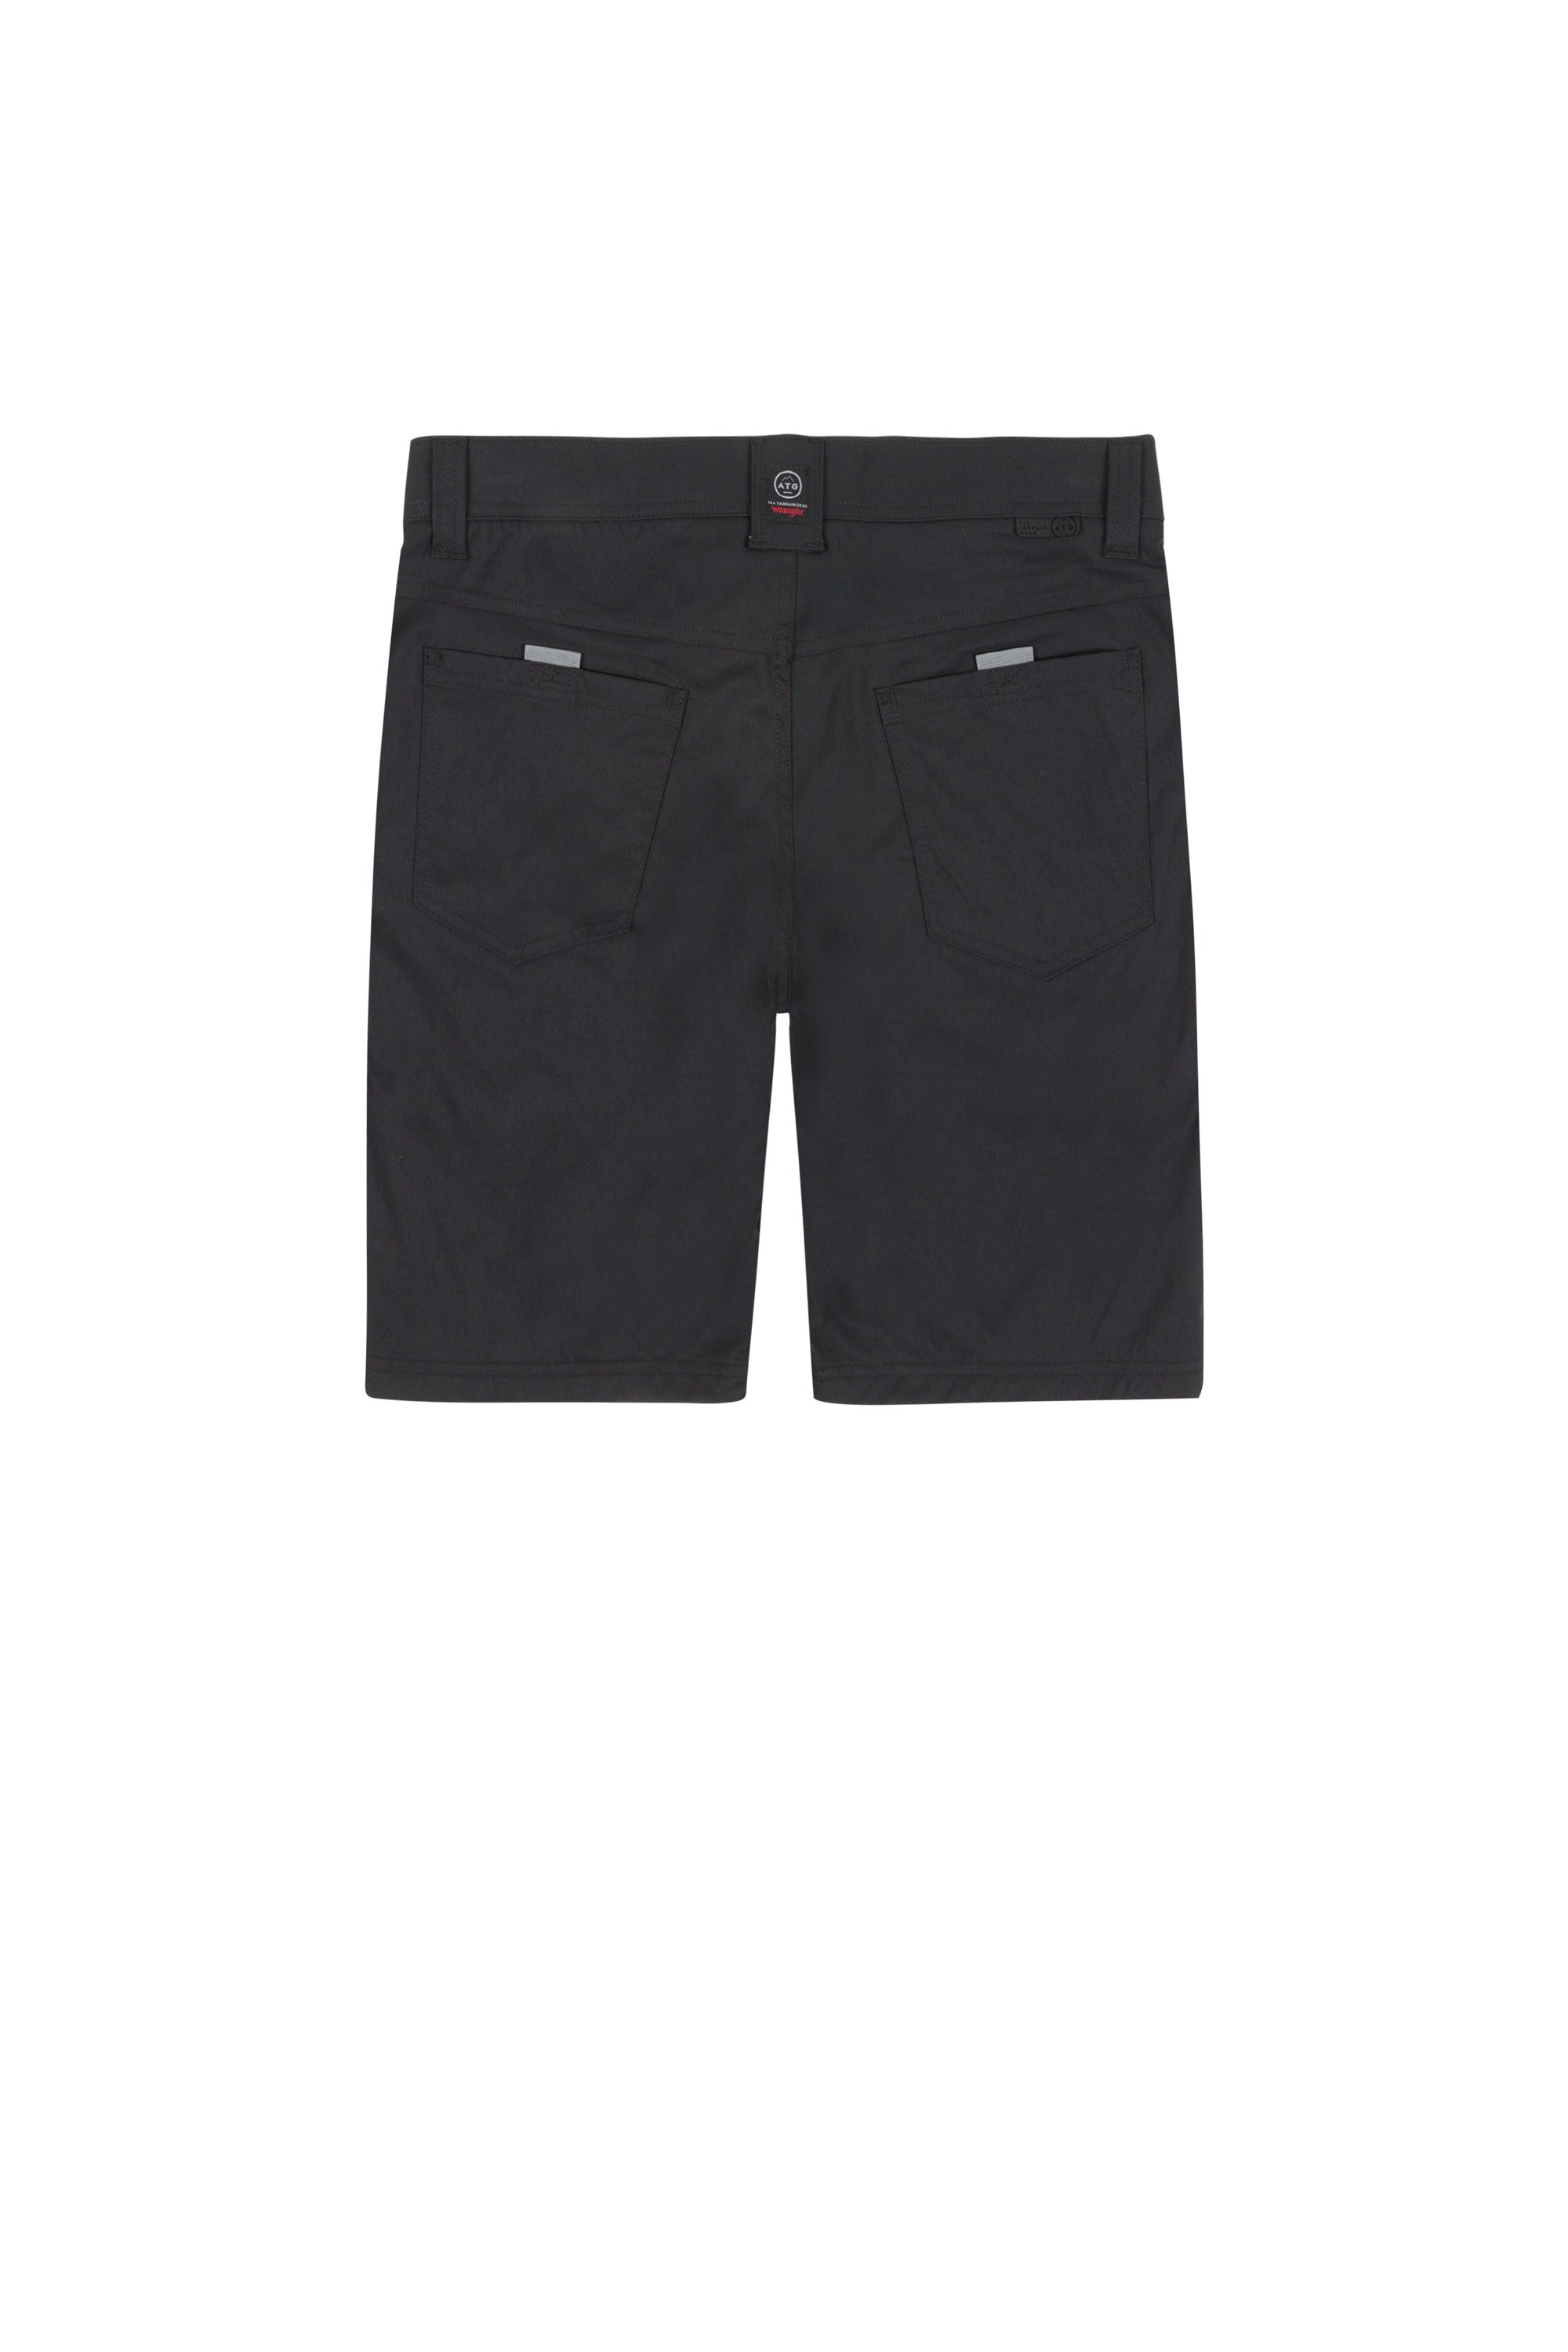 8Pkt Belted Short in Black Shorts Wrangler   